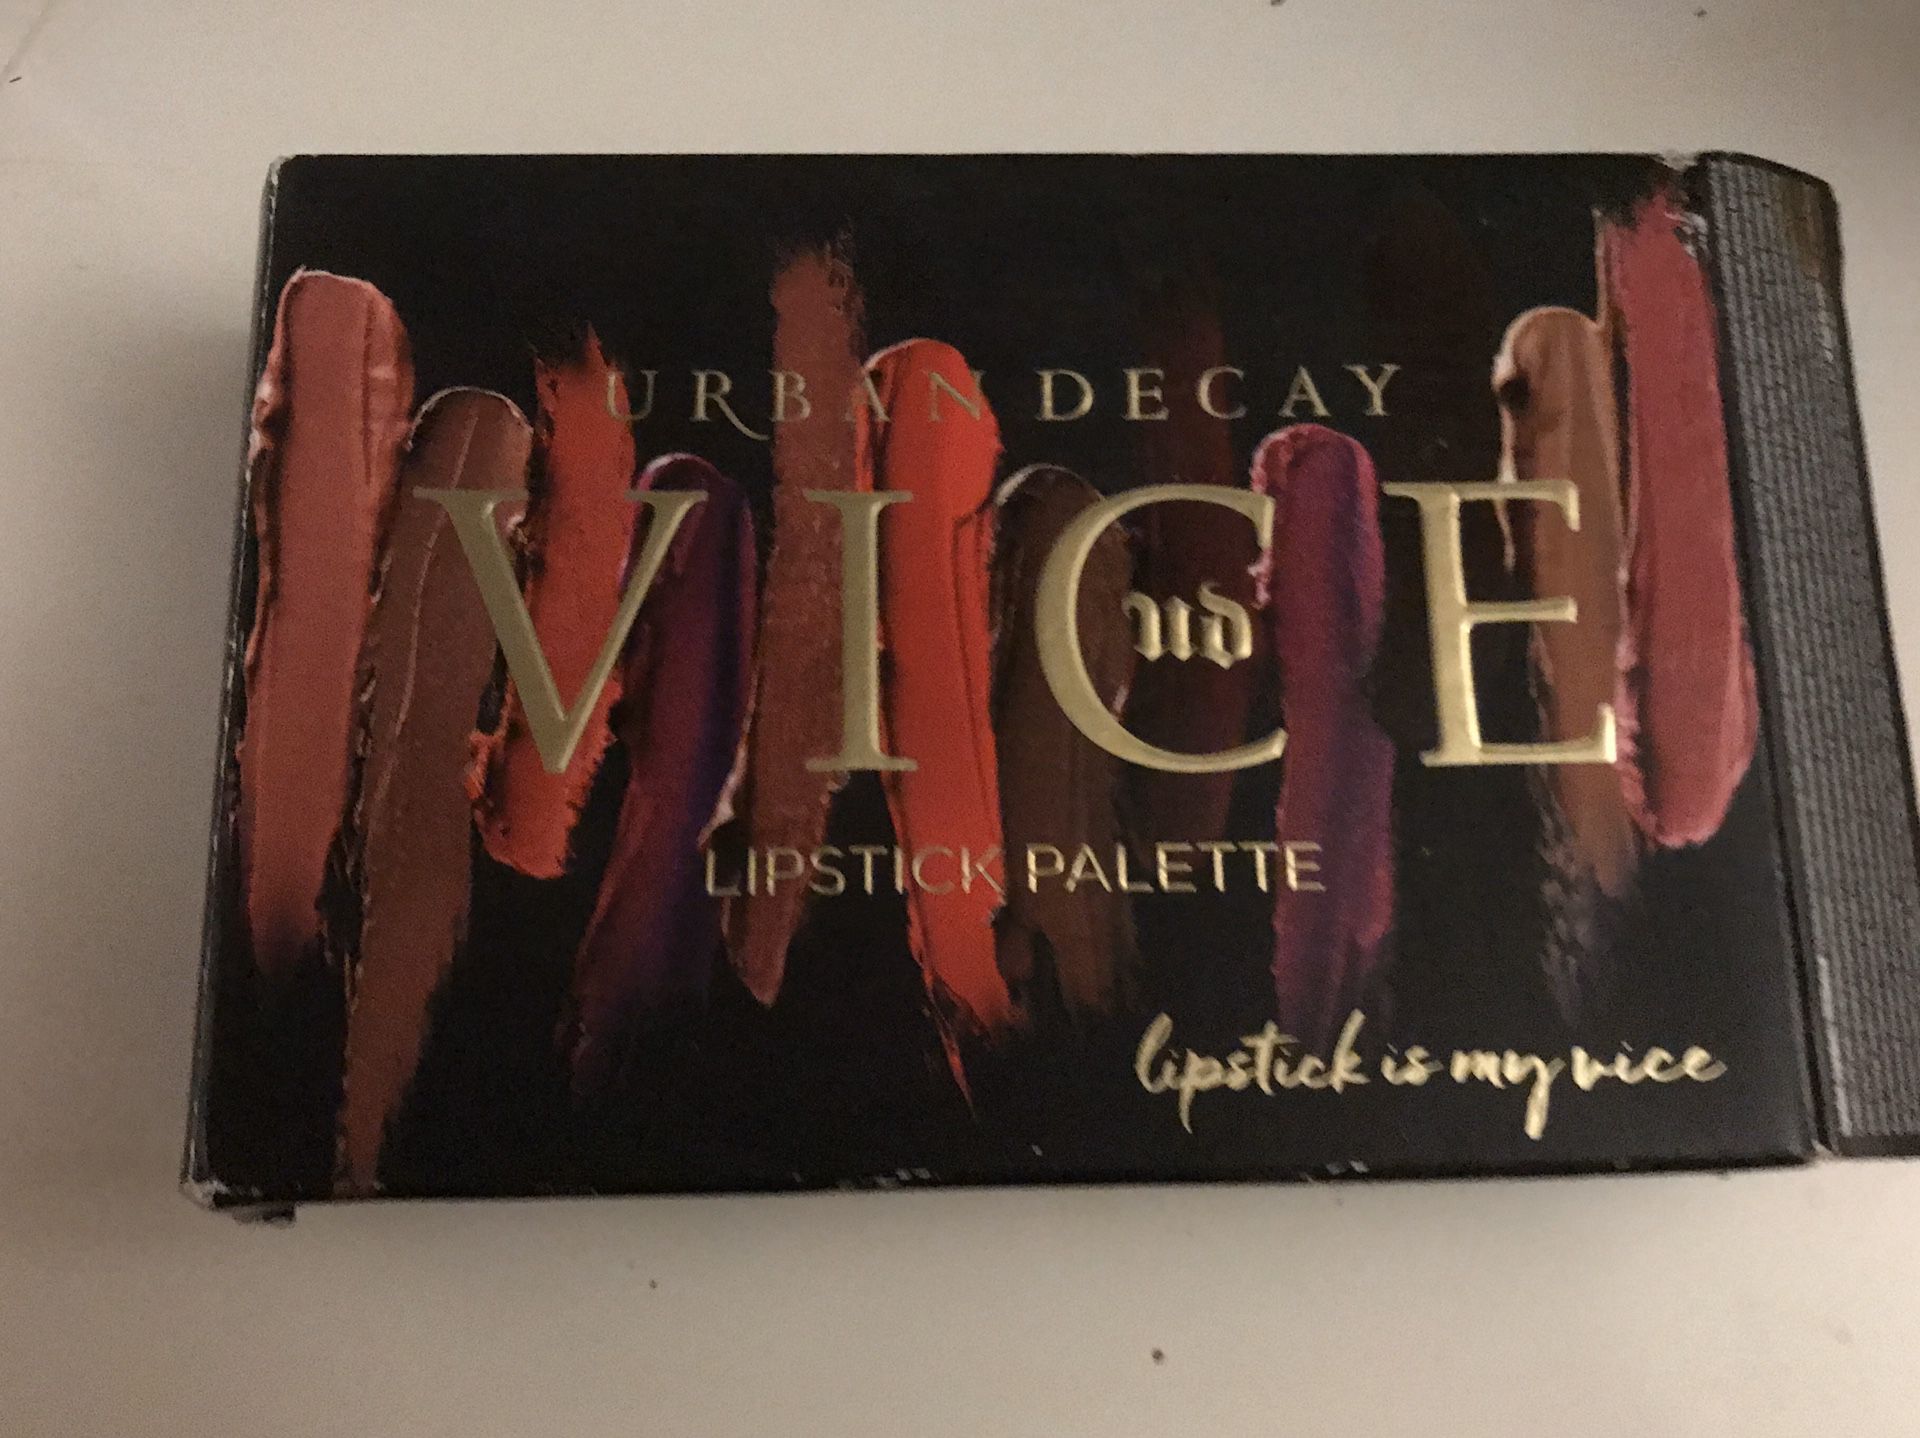 Urban Decay lipstick palette